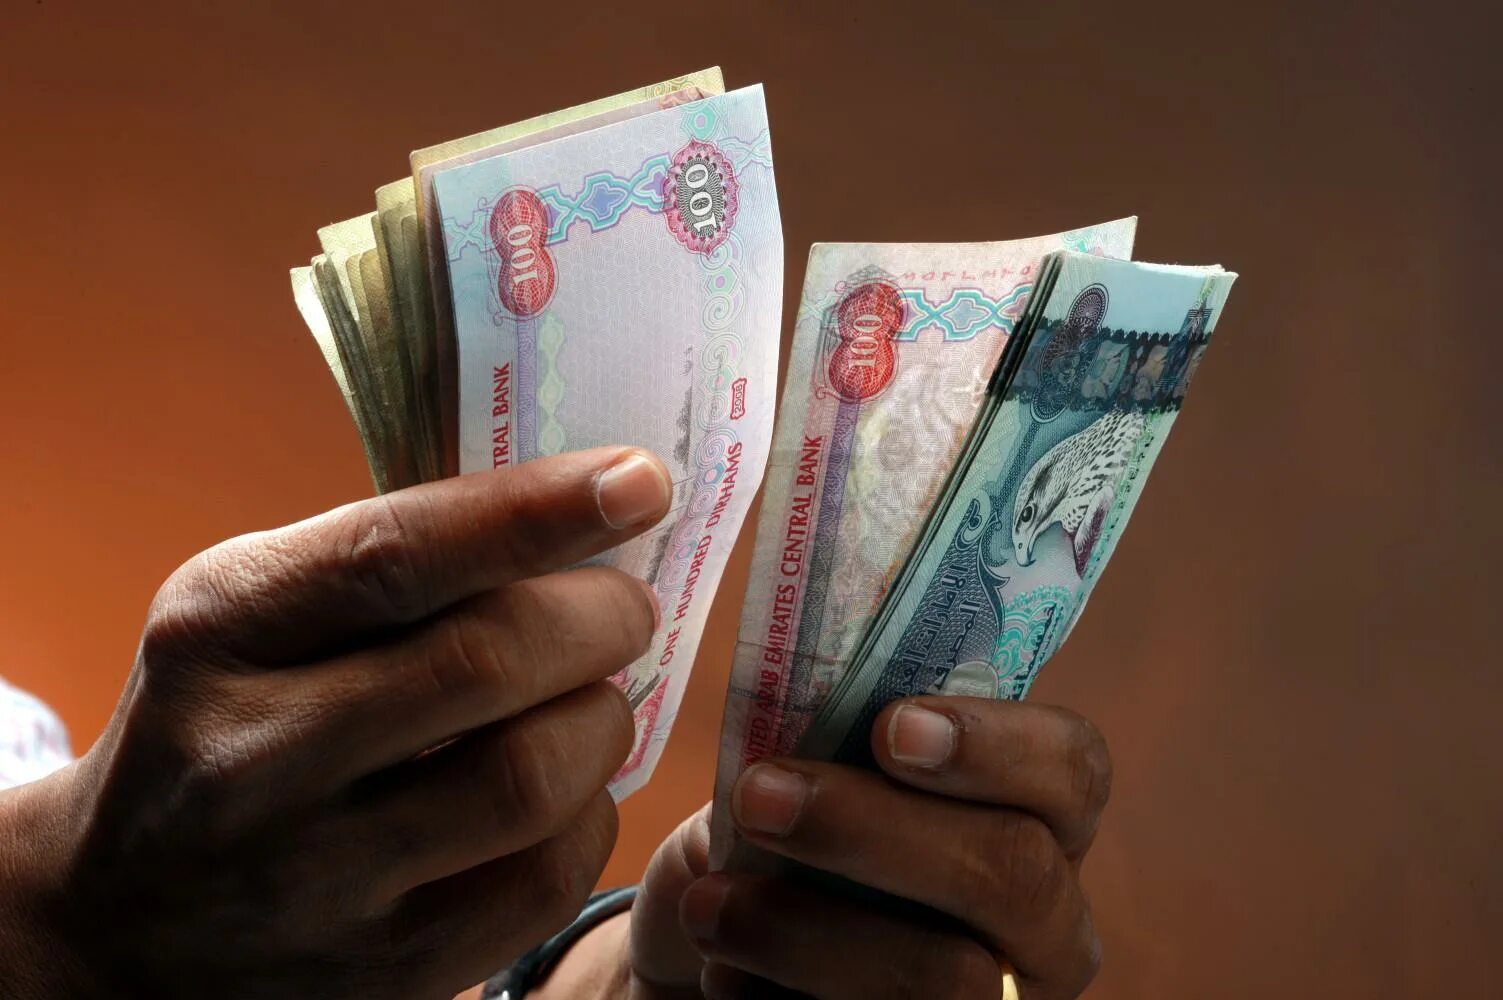 Арабские купюры. Дубайский деньги. Деньги арабских Эмиратов. Купюры ОАЭ. Дубайский доллар